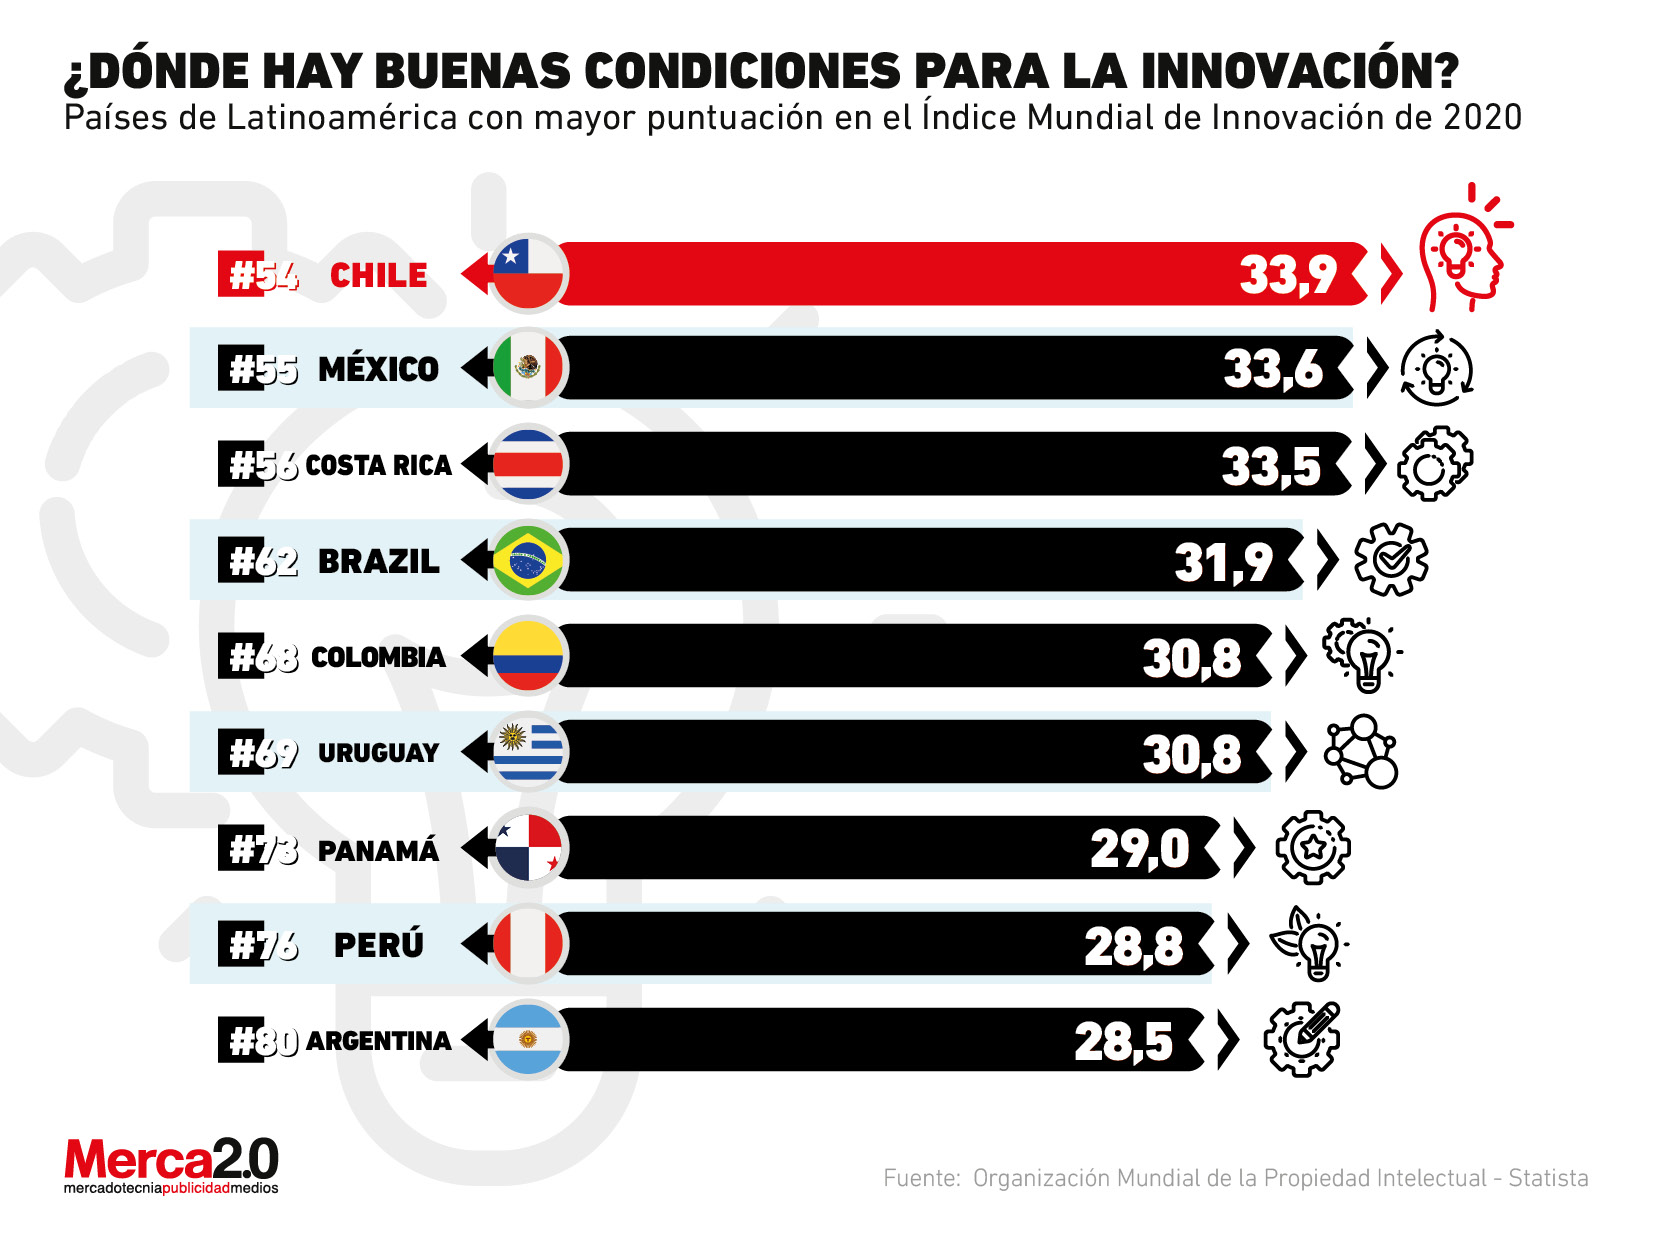 Los países líderes en innovación dentro de Latinoamérica